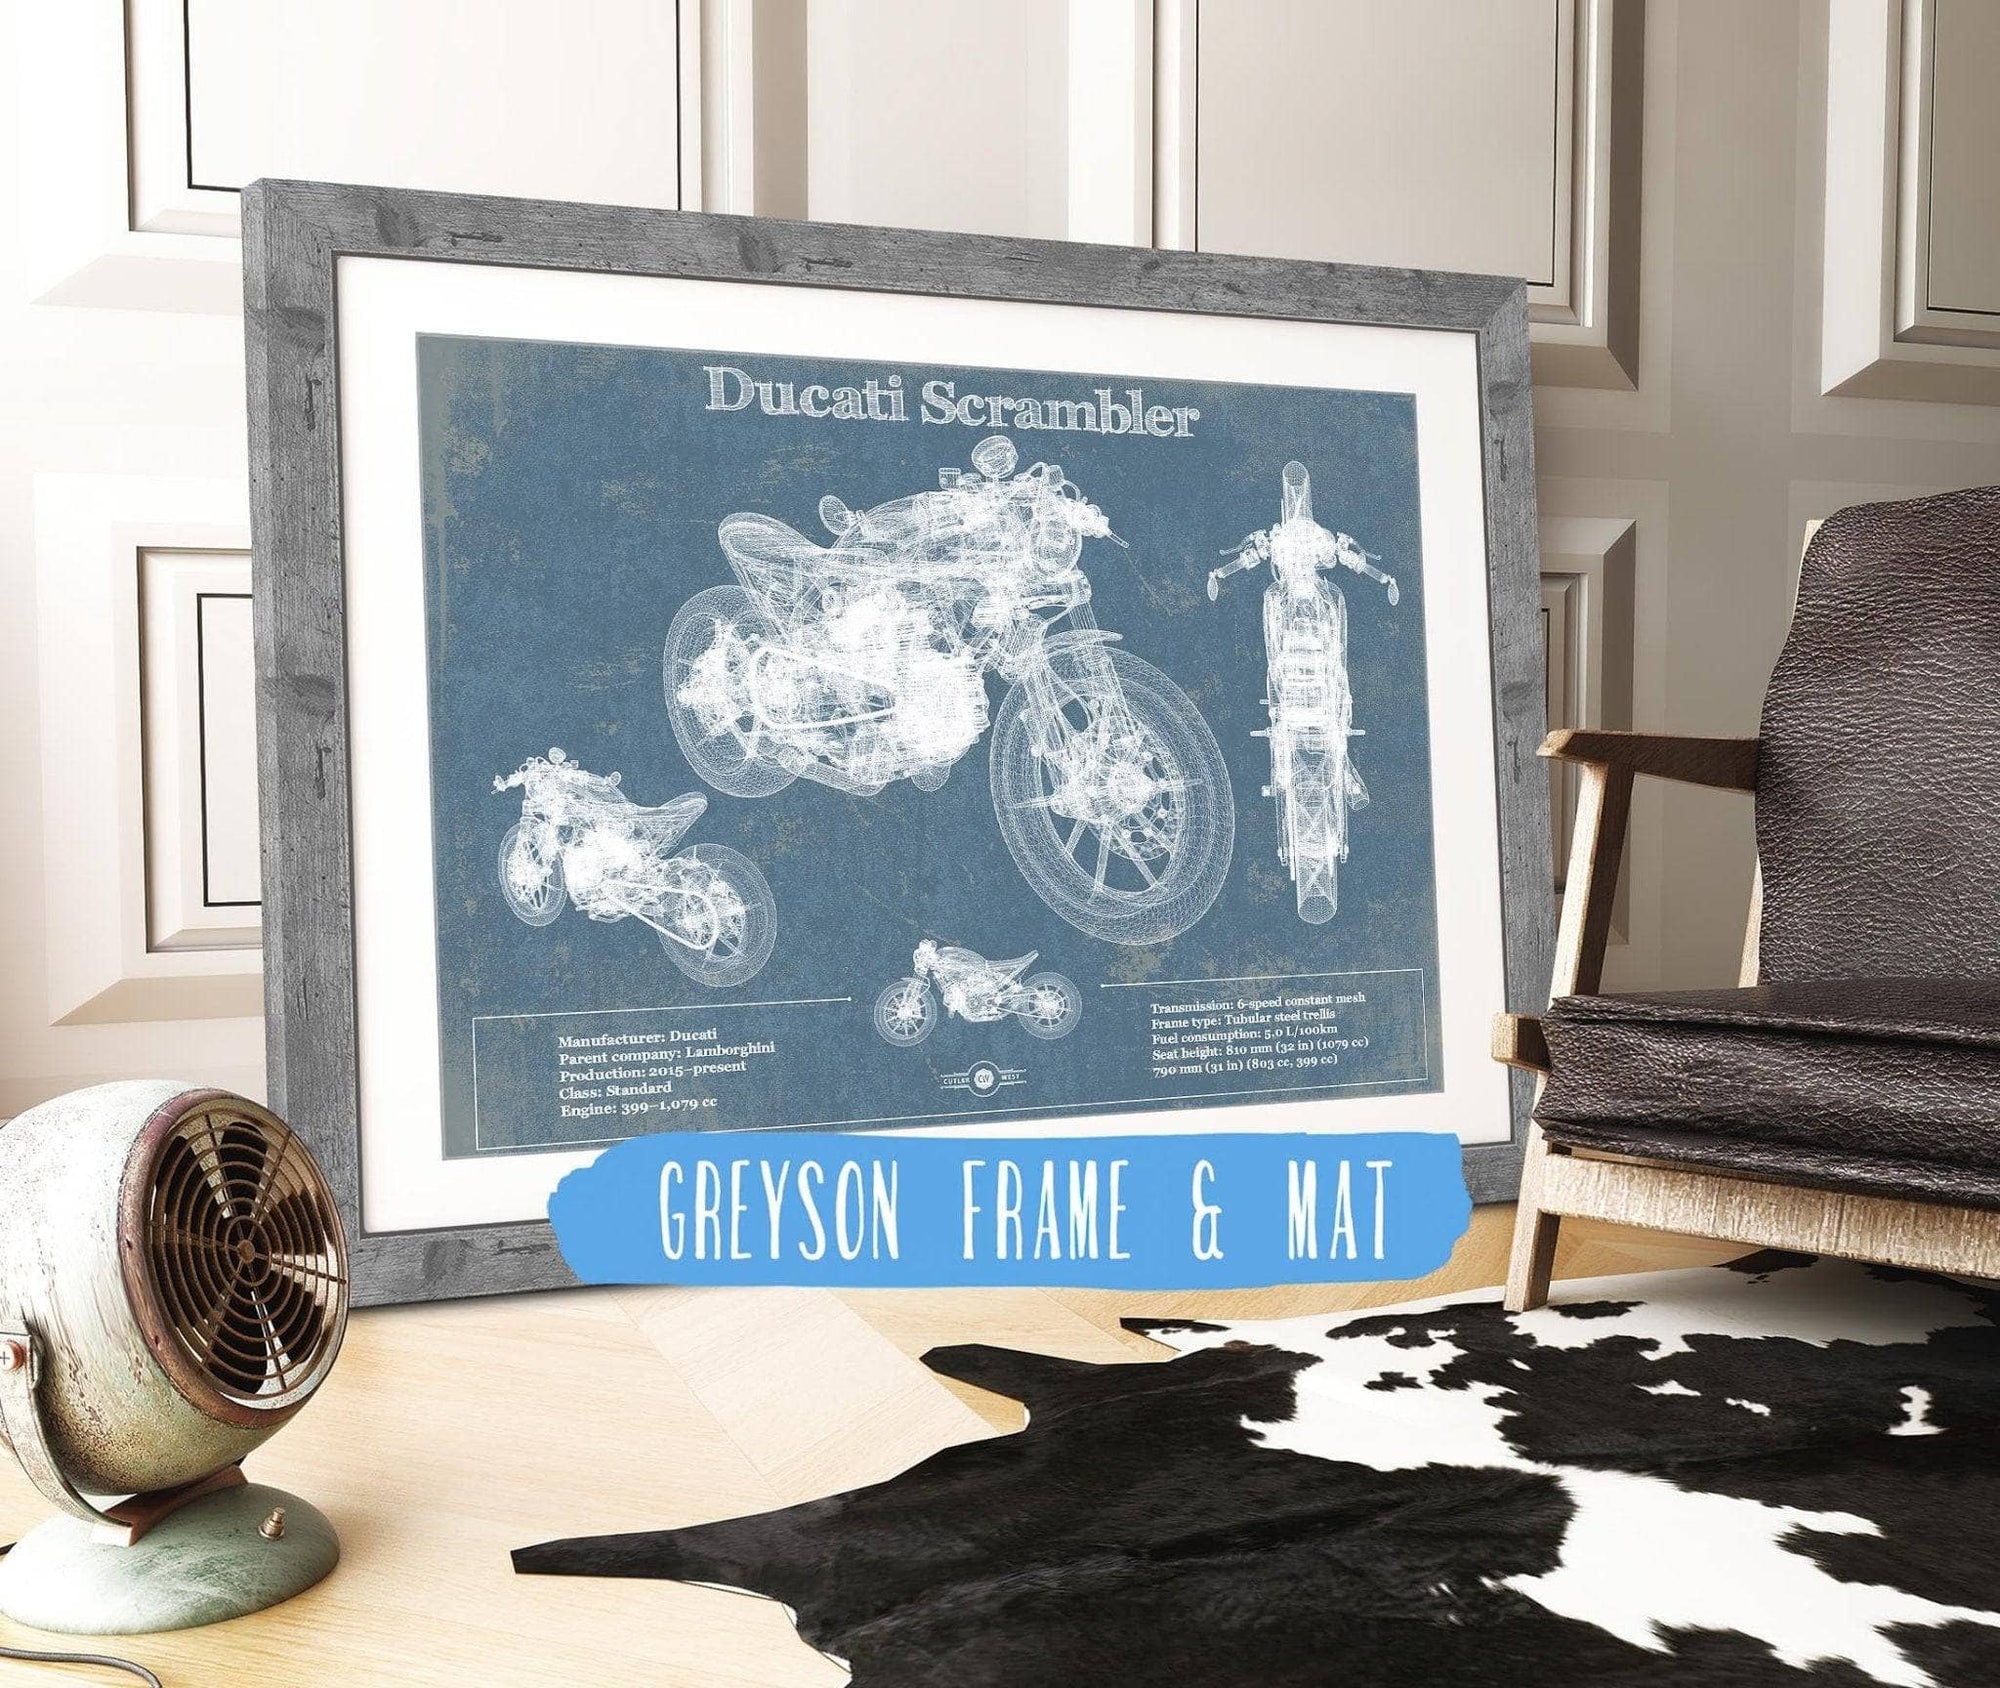 Cutler West 14" x 11" / Greyson Frame & Mat Ducati Scrambler Vintage Blueprint Motorcycle Patent Print 833110038_61285